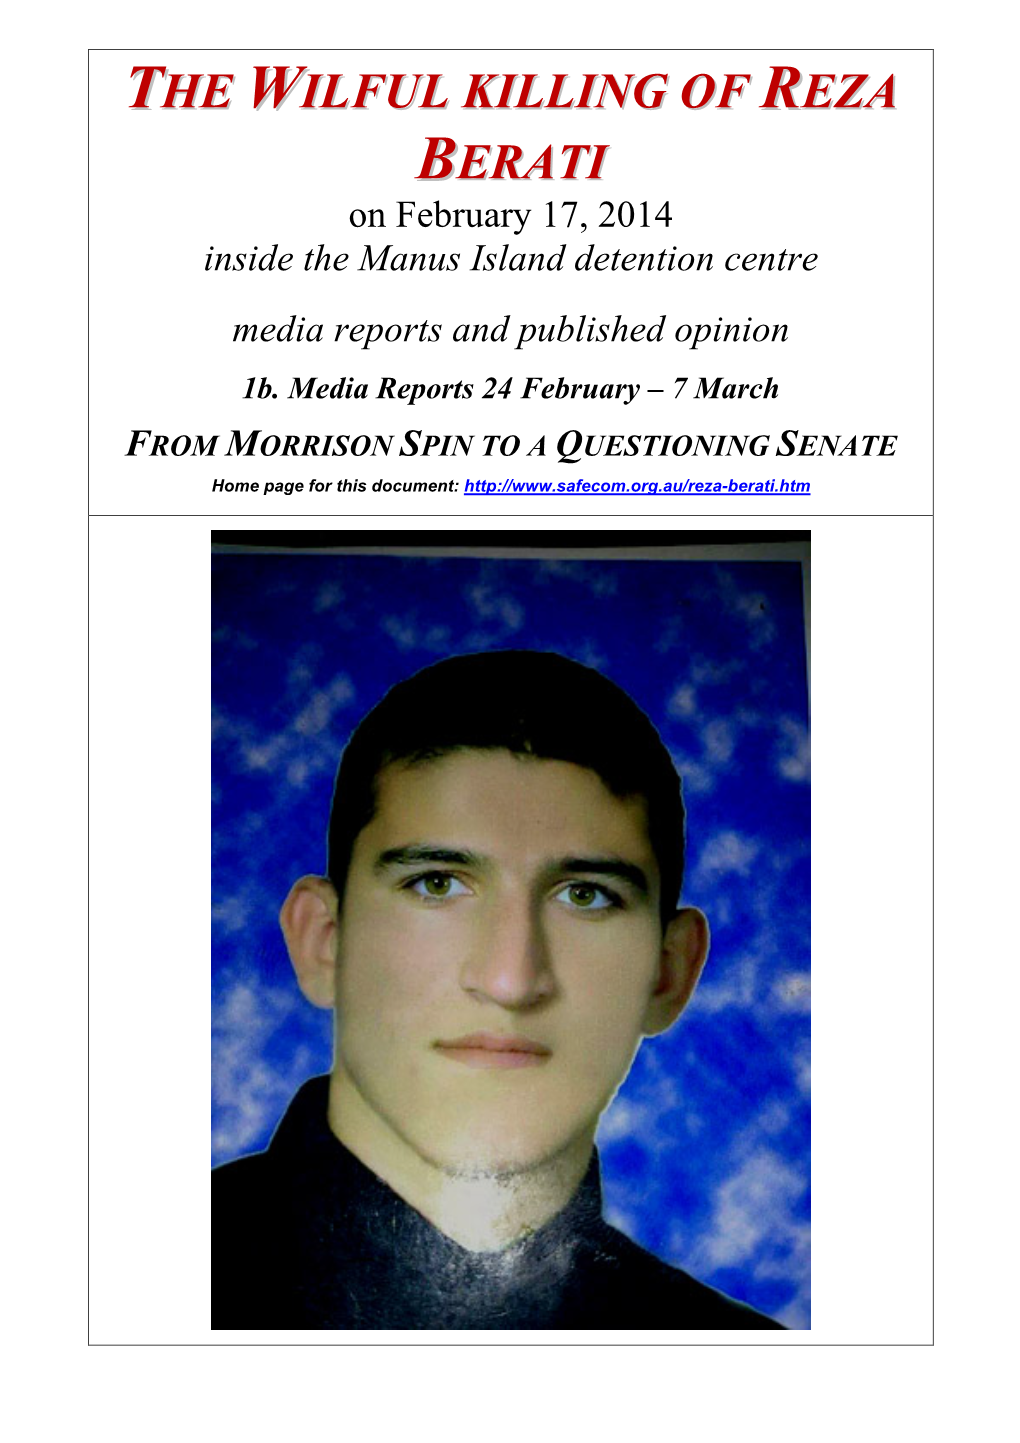 The Wilful Killing of Reza Berati on February 17, 2014